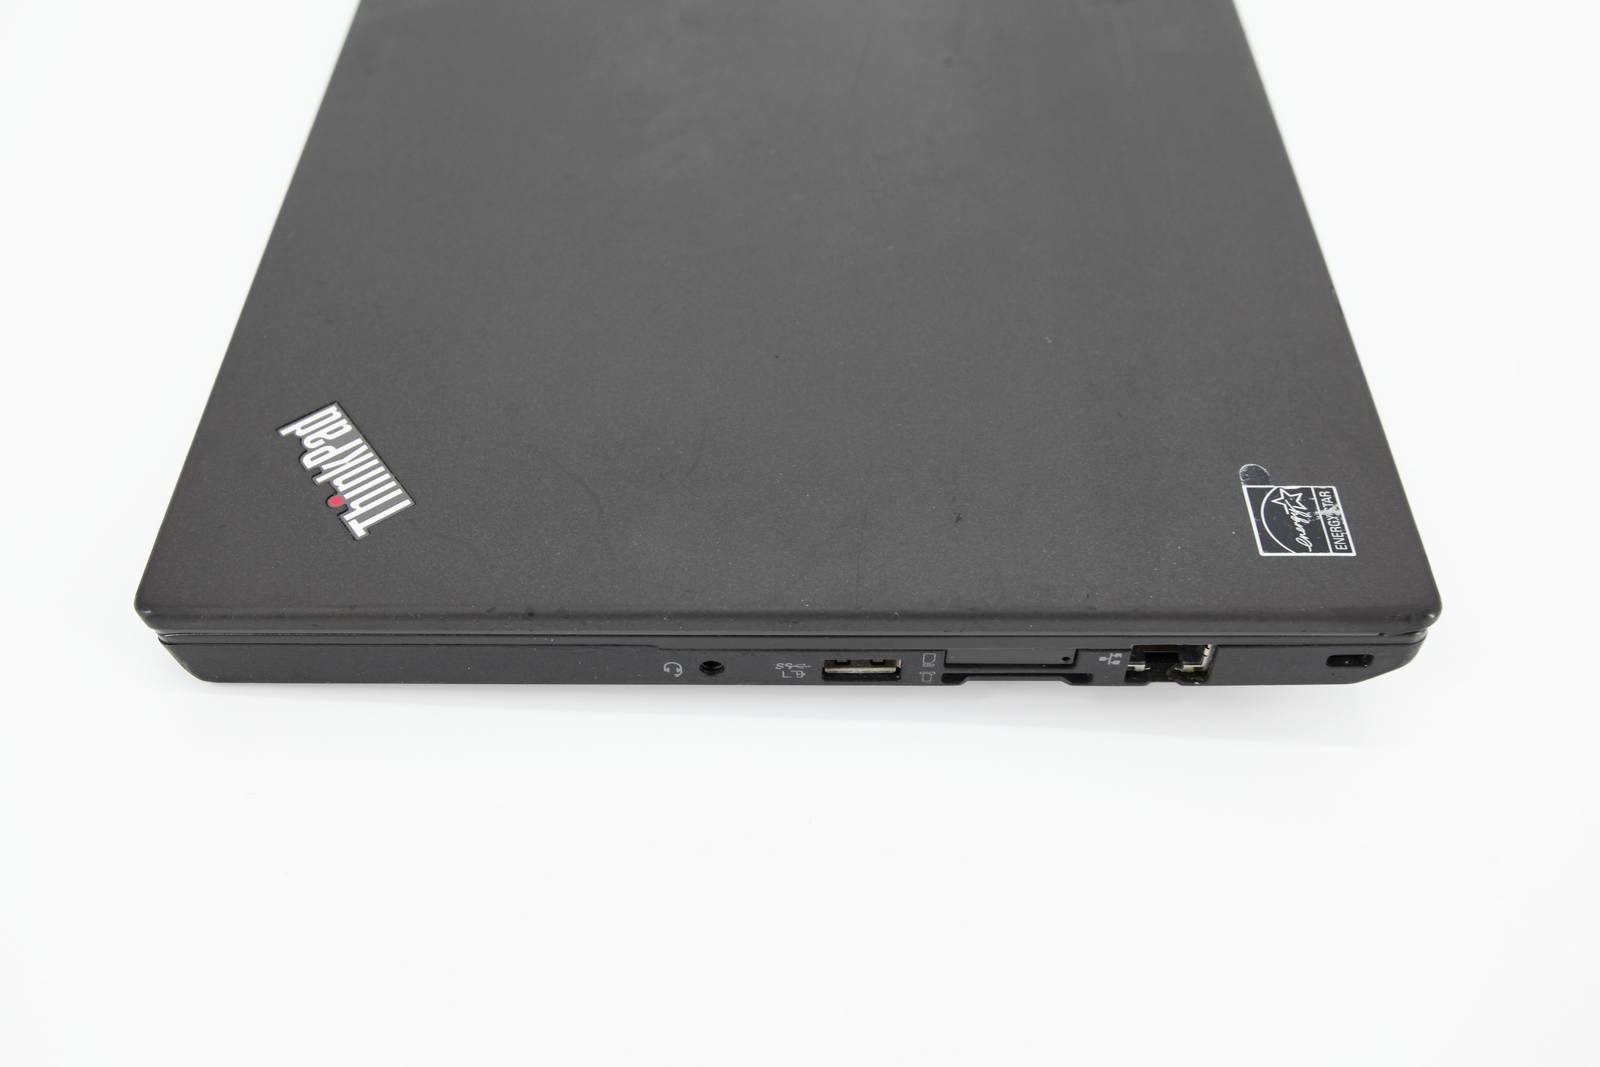 Lenovo Thinkpad X250 12.5" IPS Laptop: Intel i5, 500GB HDD, 8GB RAM, Warranty - CruiseTech